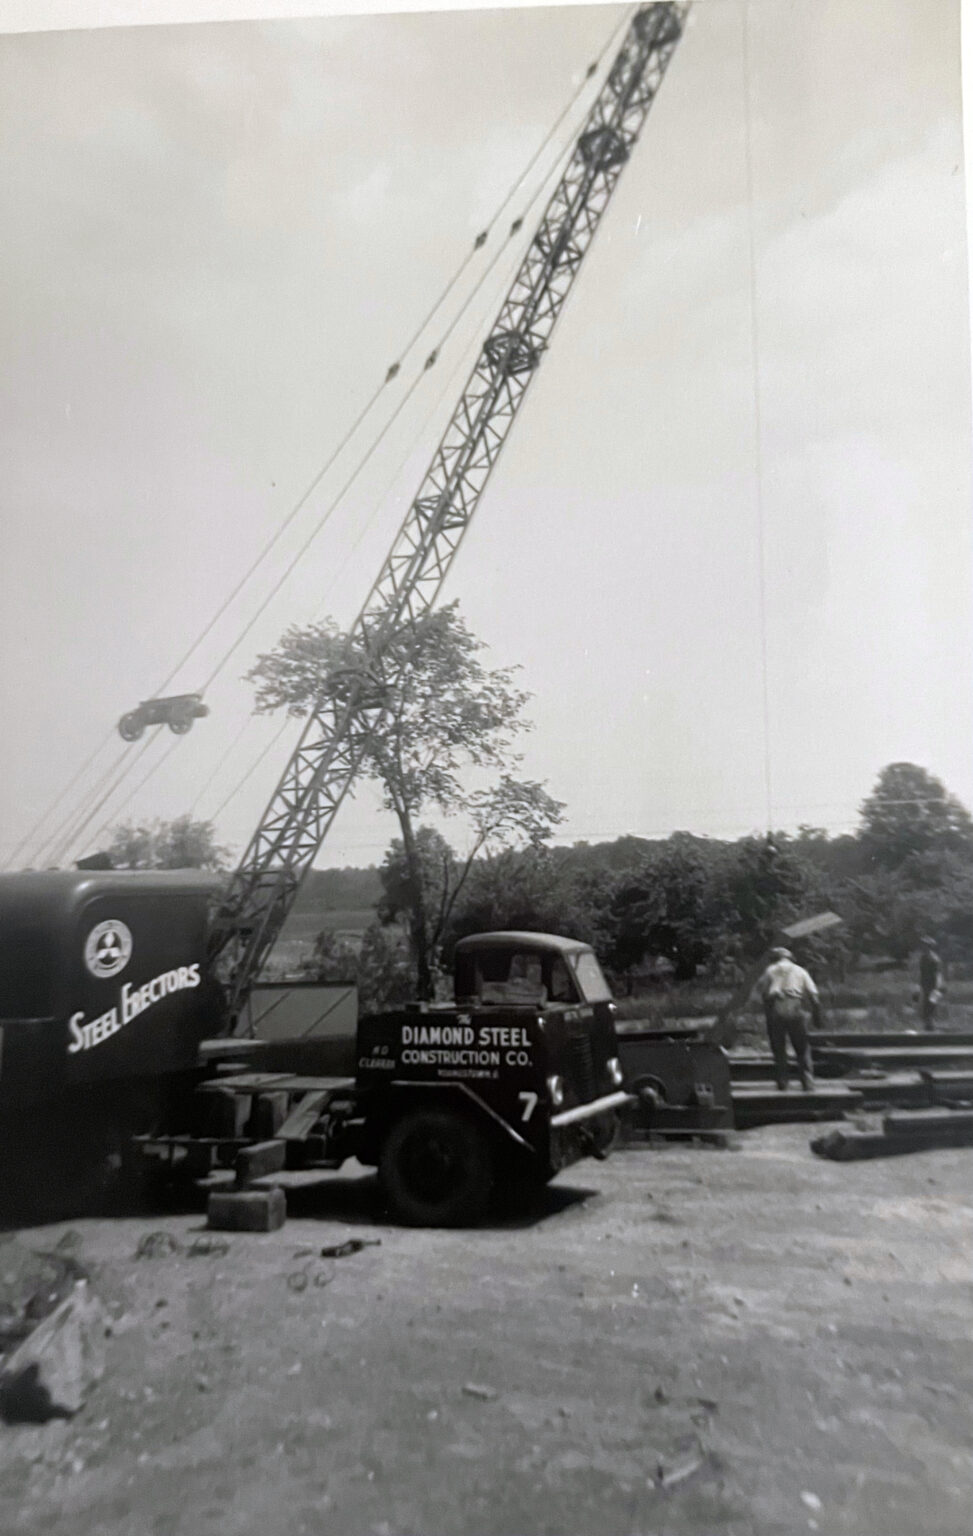 Old image of Diamond Steel crane